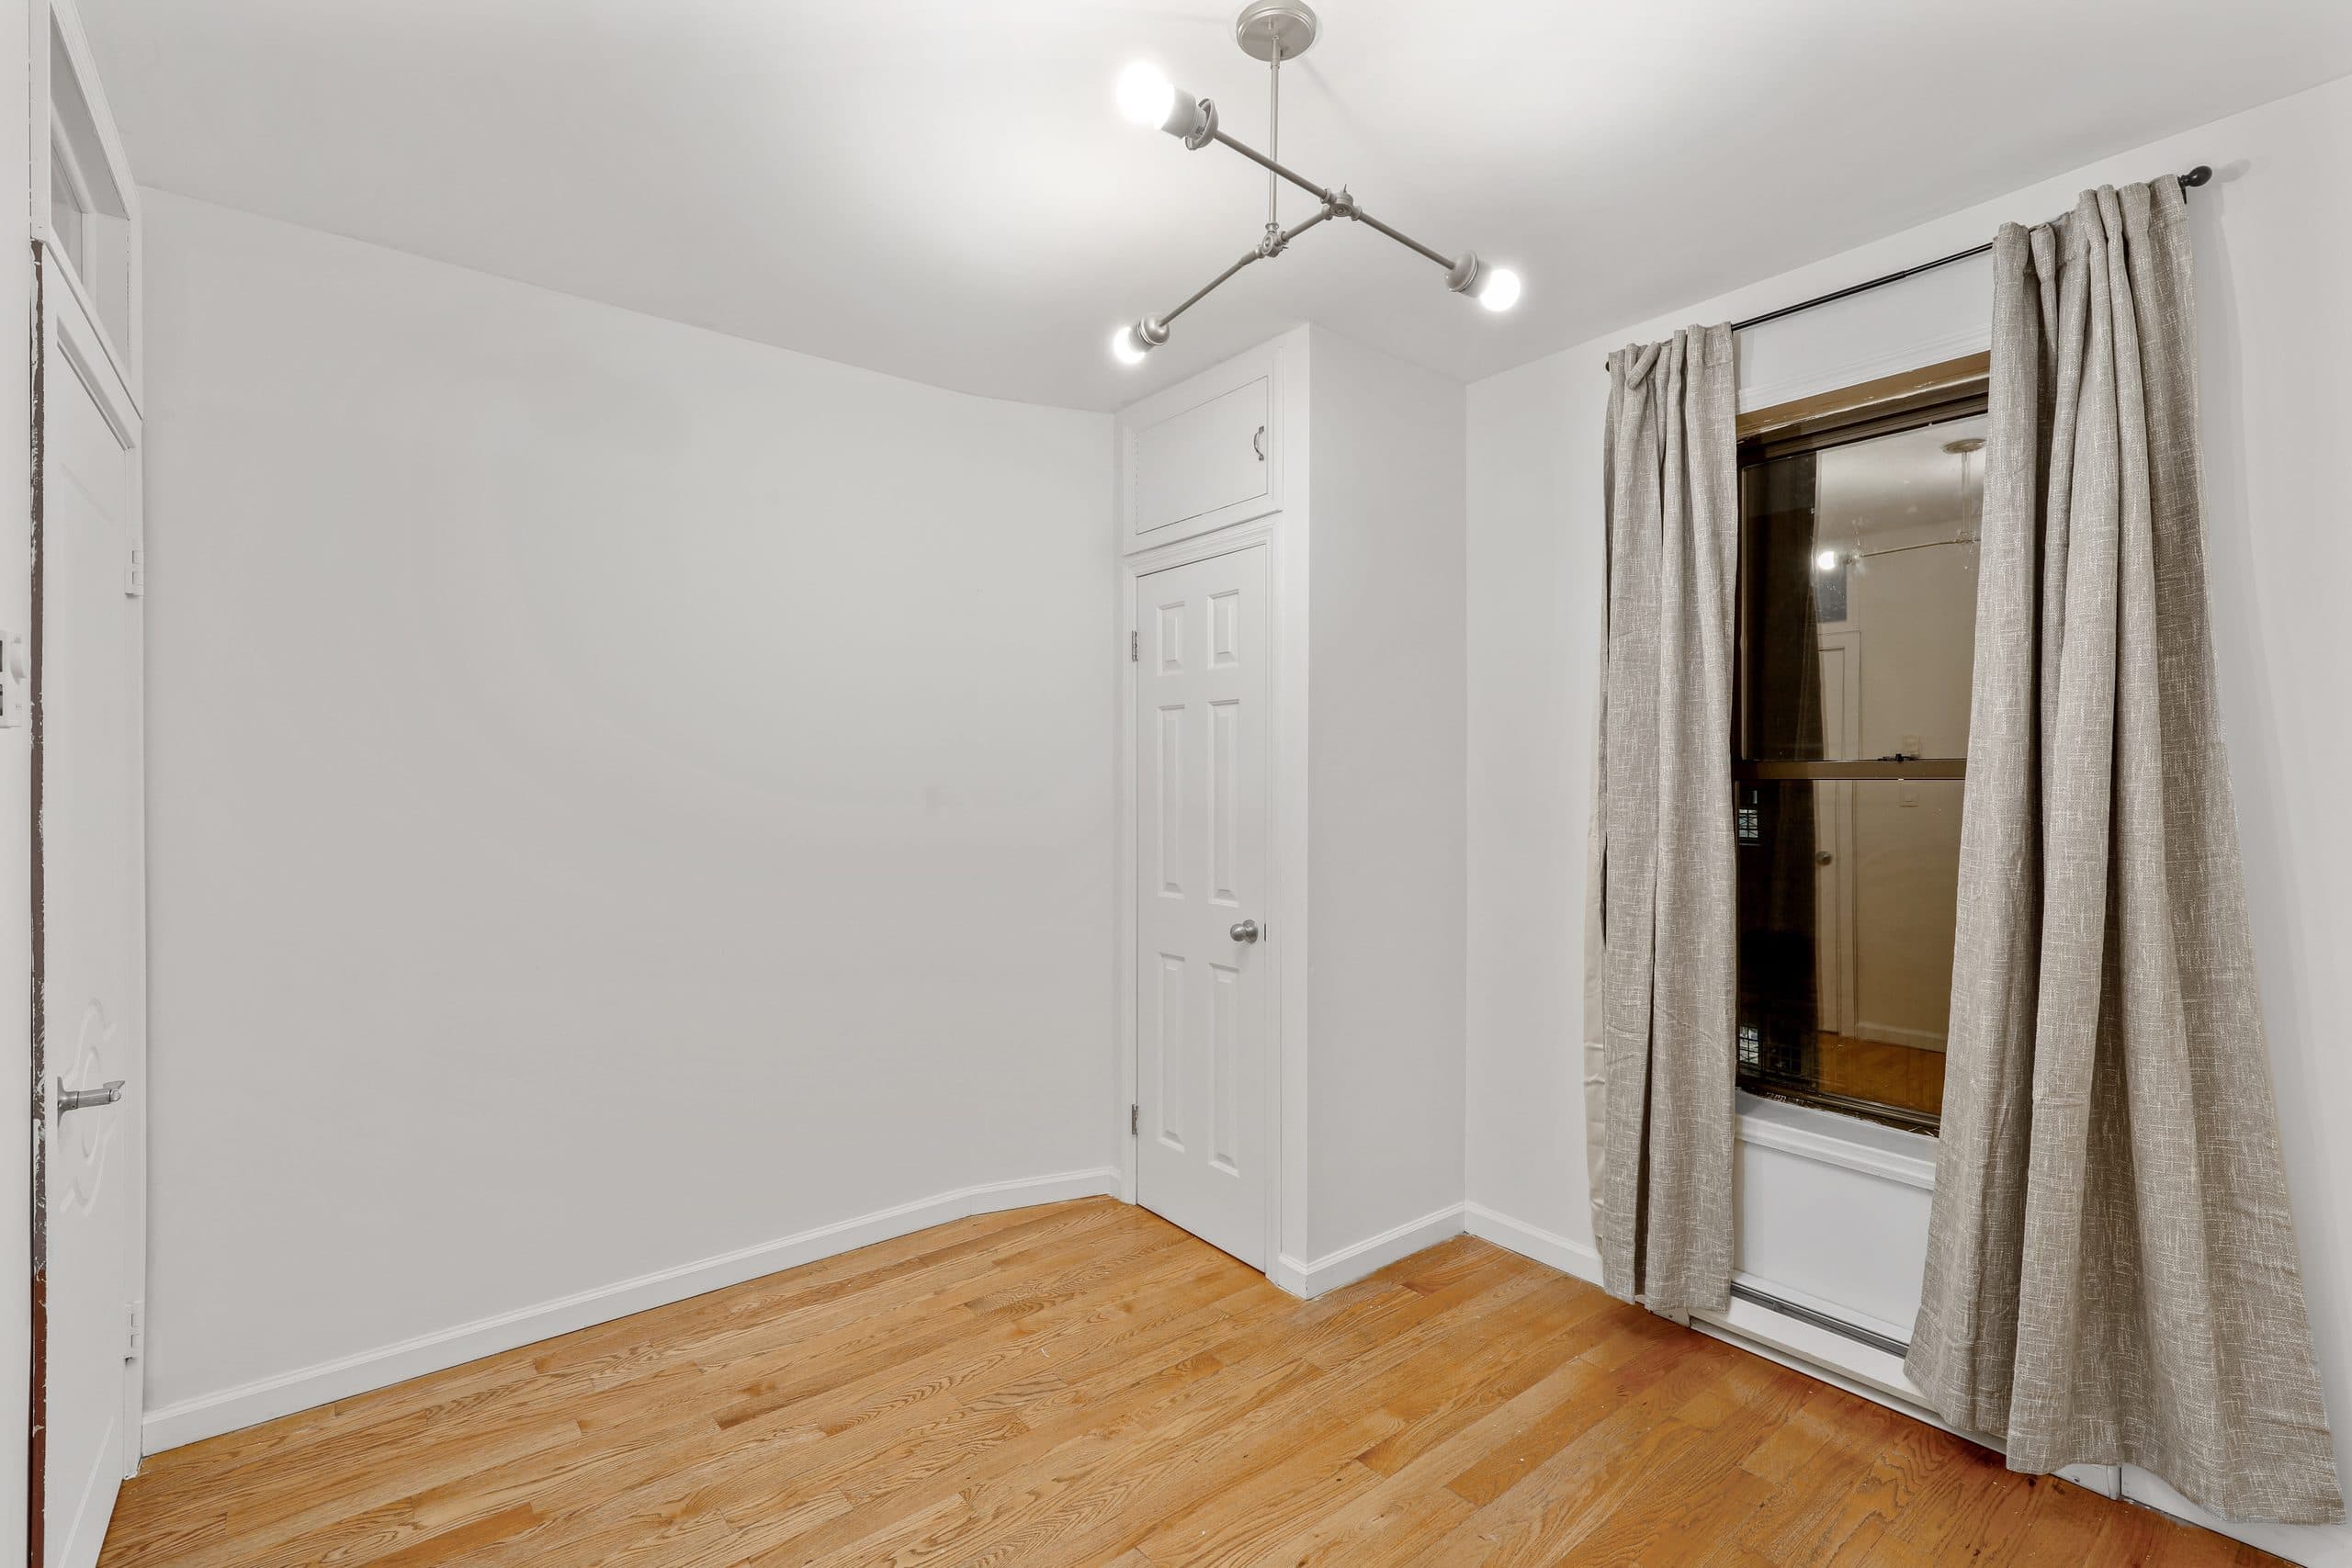 Photo 3 of #2104: Full Bedroom B at June Homes